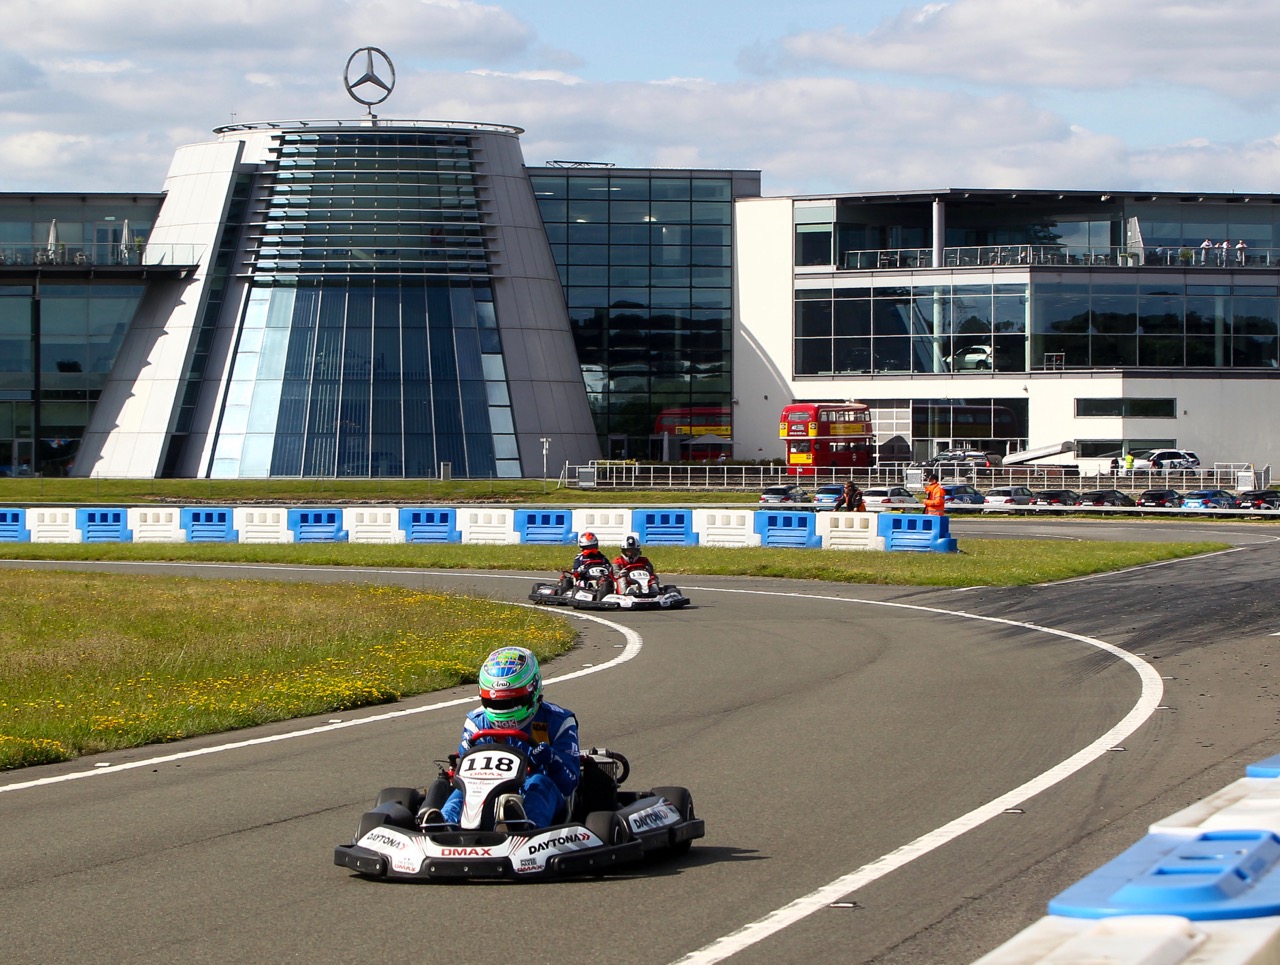 Go-karts on the track at UK Mercedes-Benz World